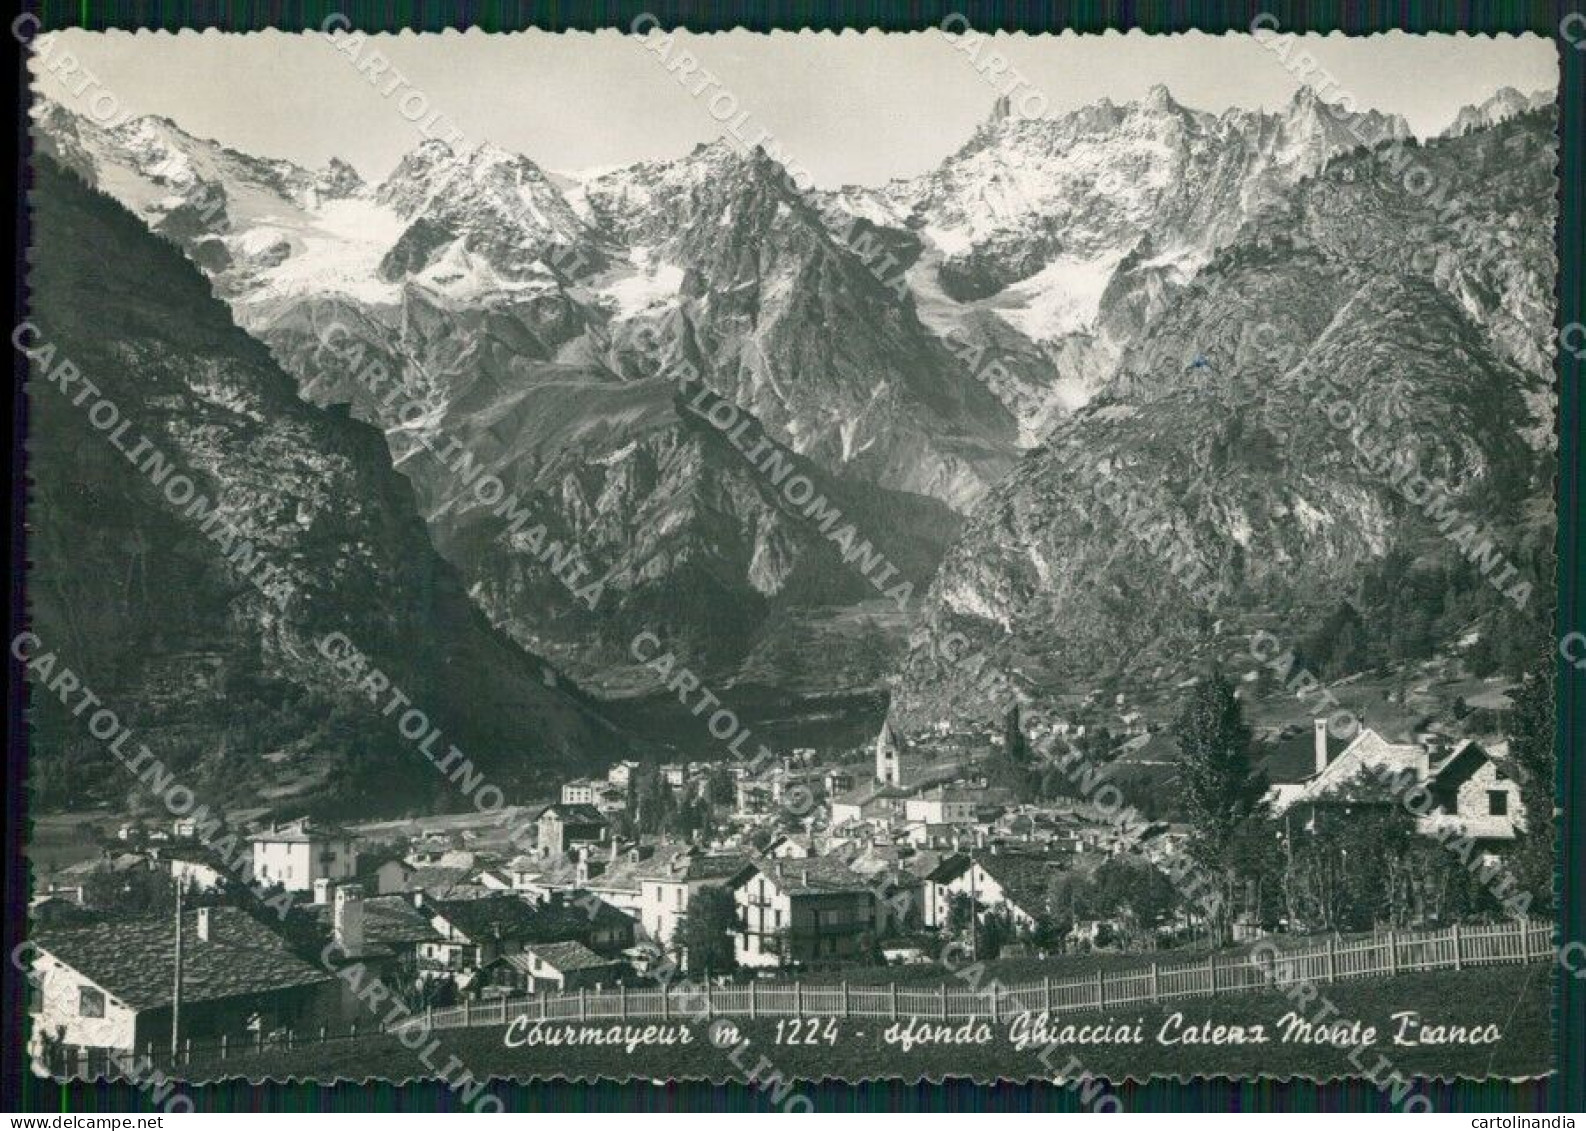 Aosta Courmayeur Ghiacciai Monte Bianco PIEGHINA Foto FG Cartolina KB1864 - Aosta